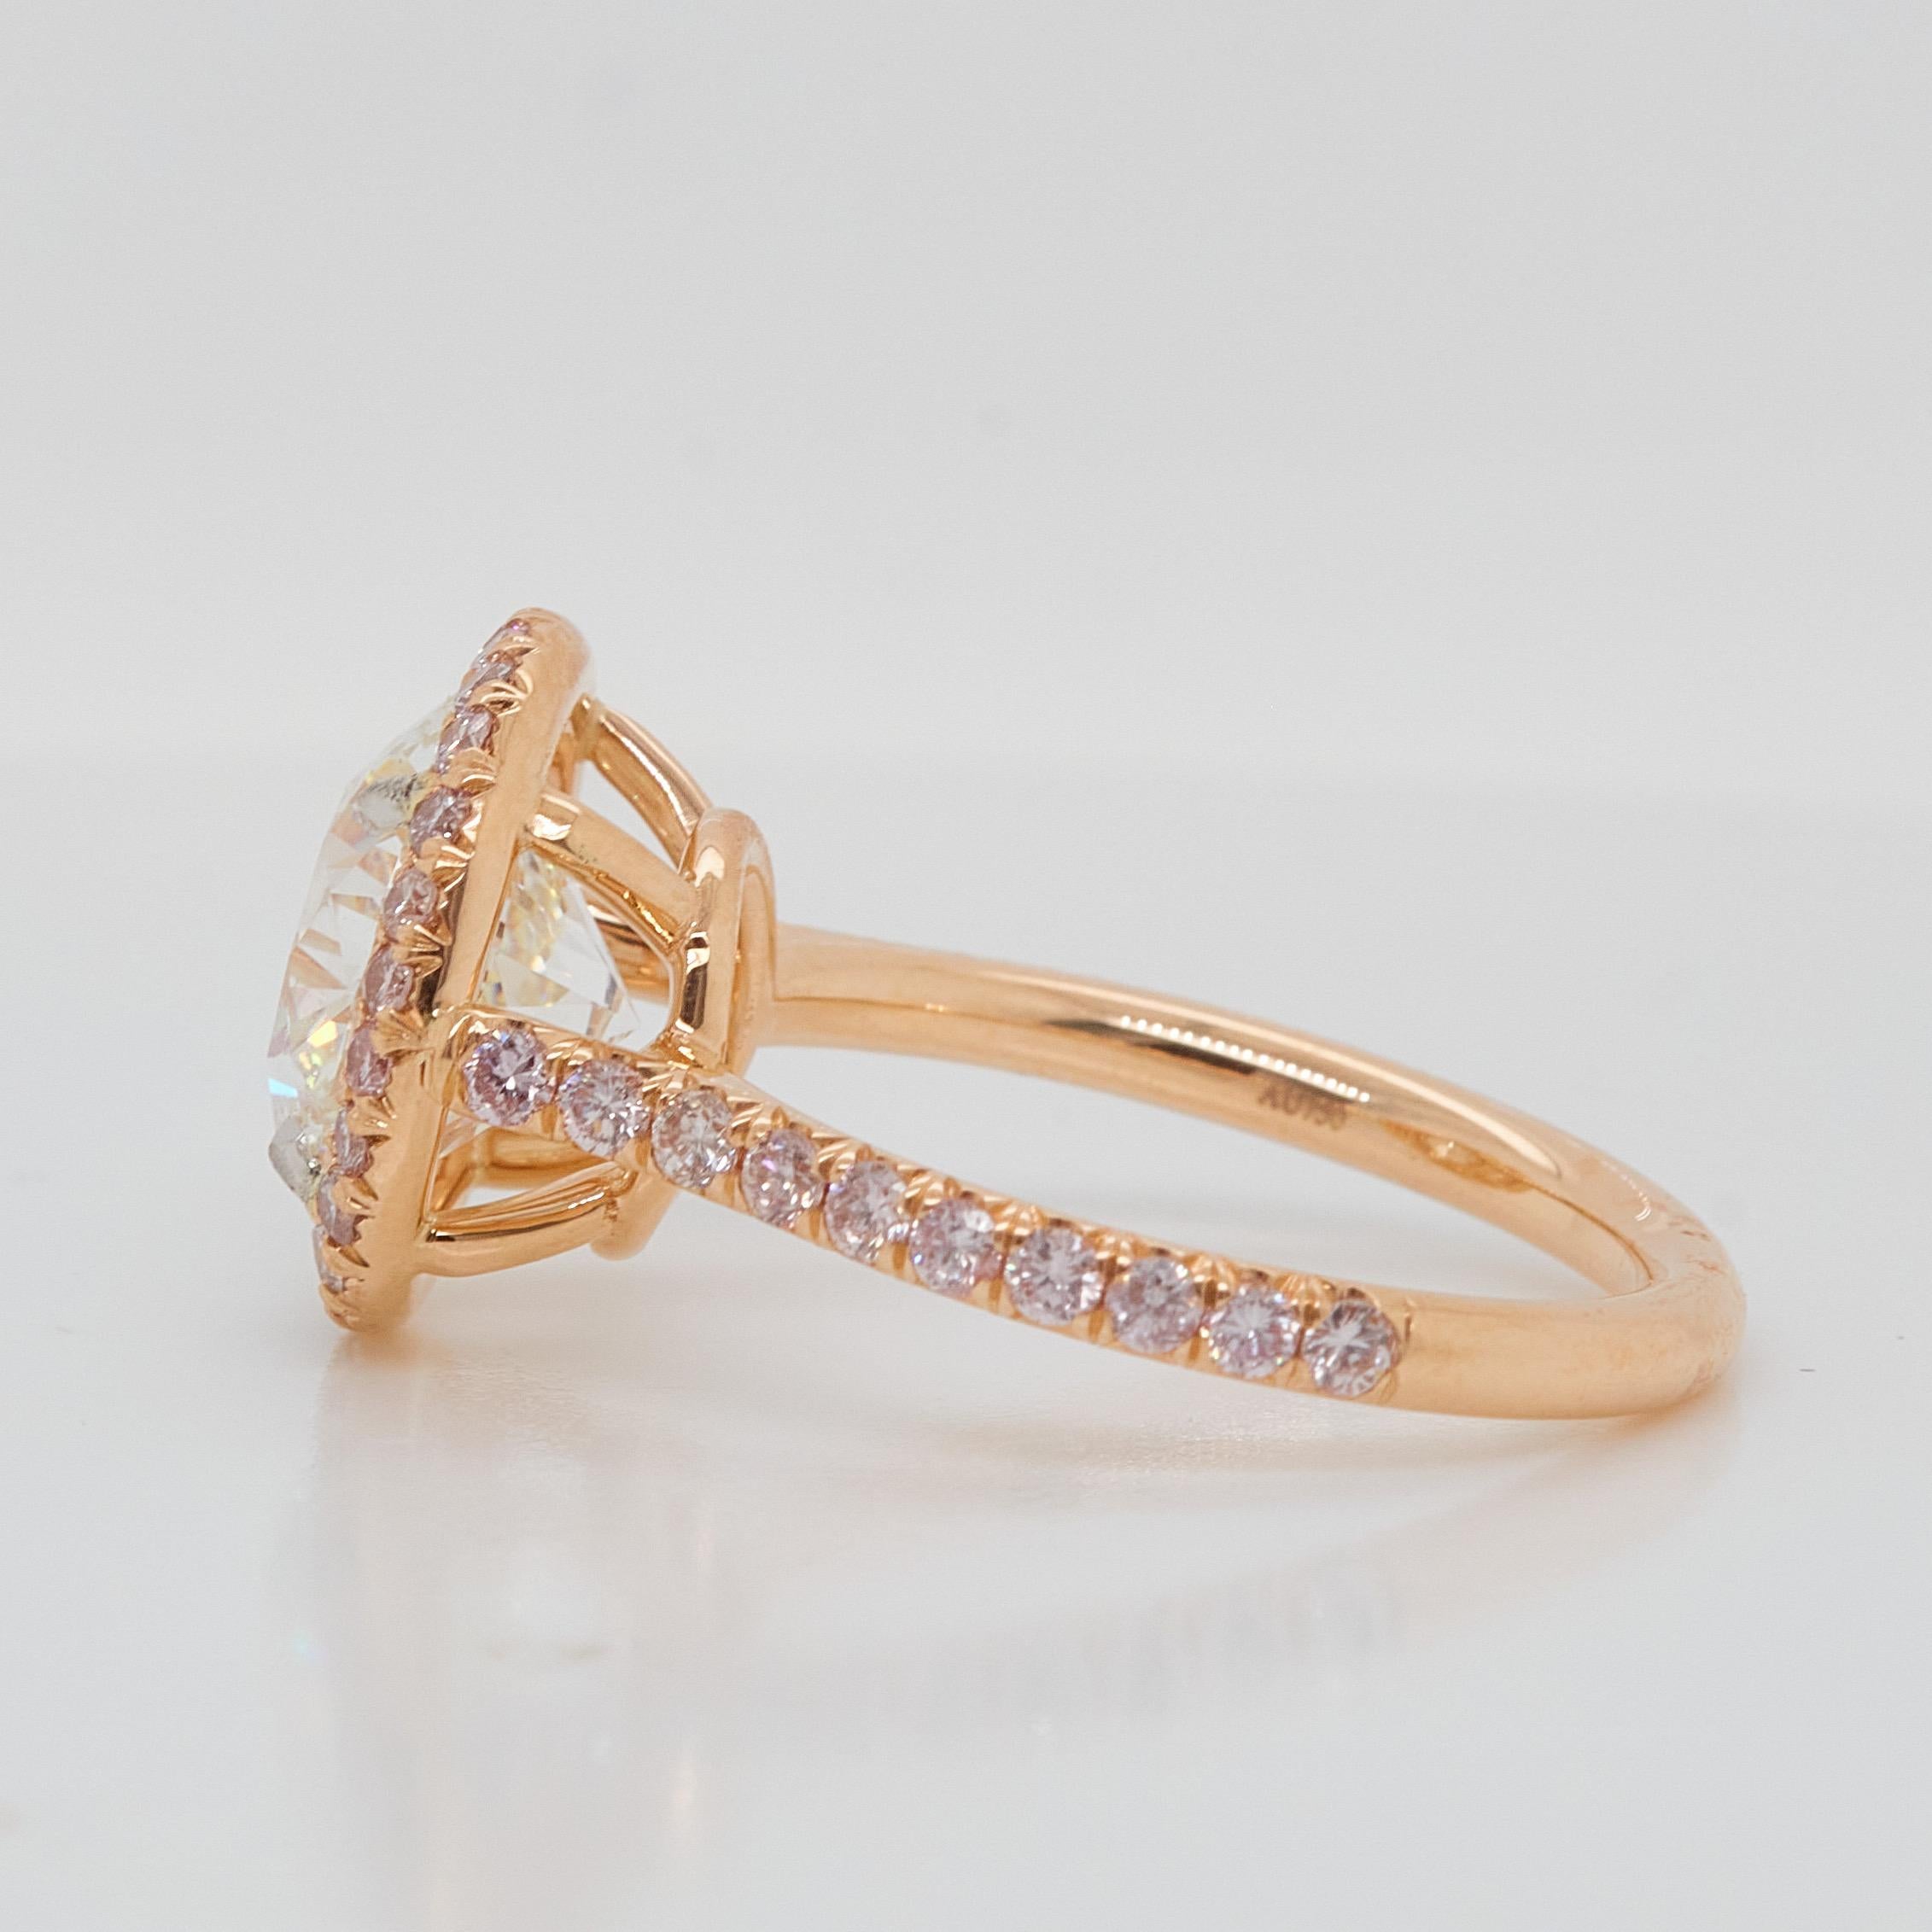 3.5 carat round diamond ring